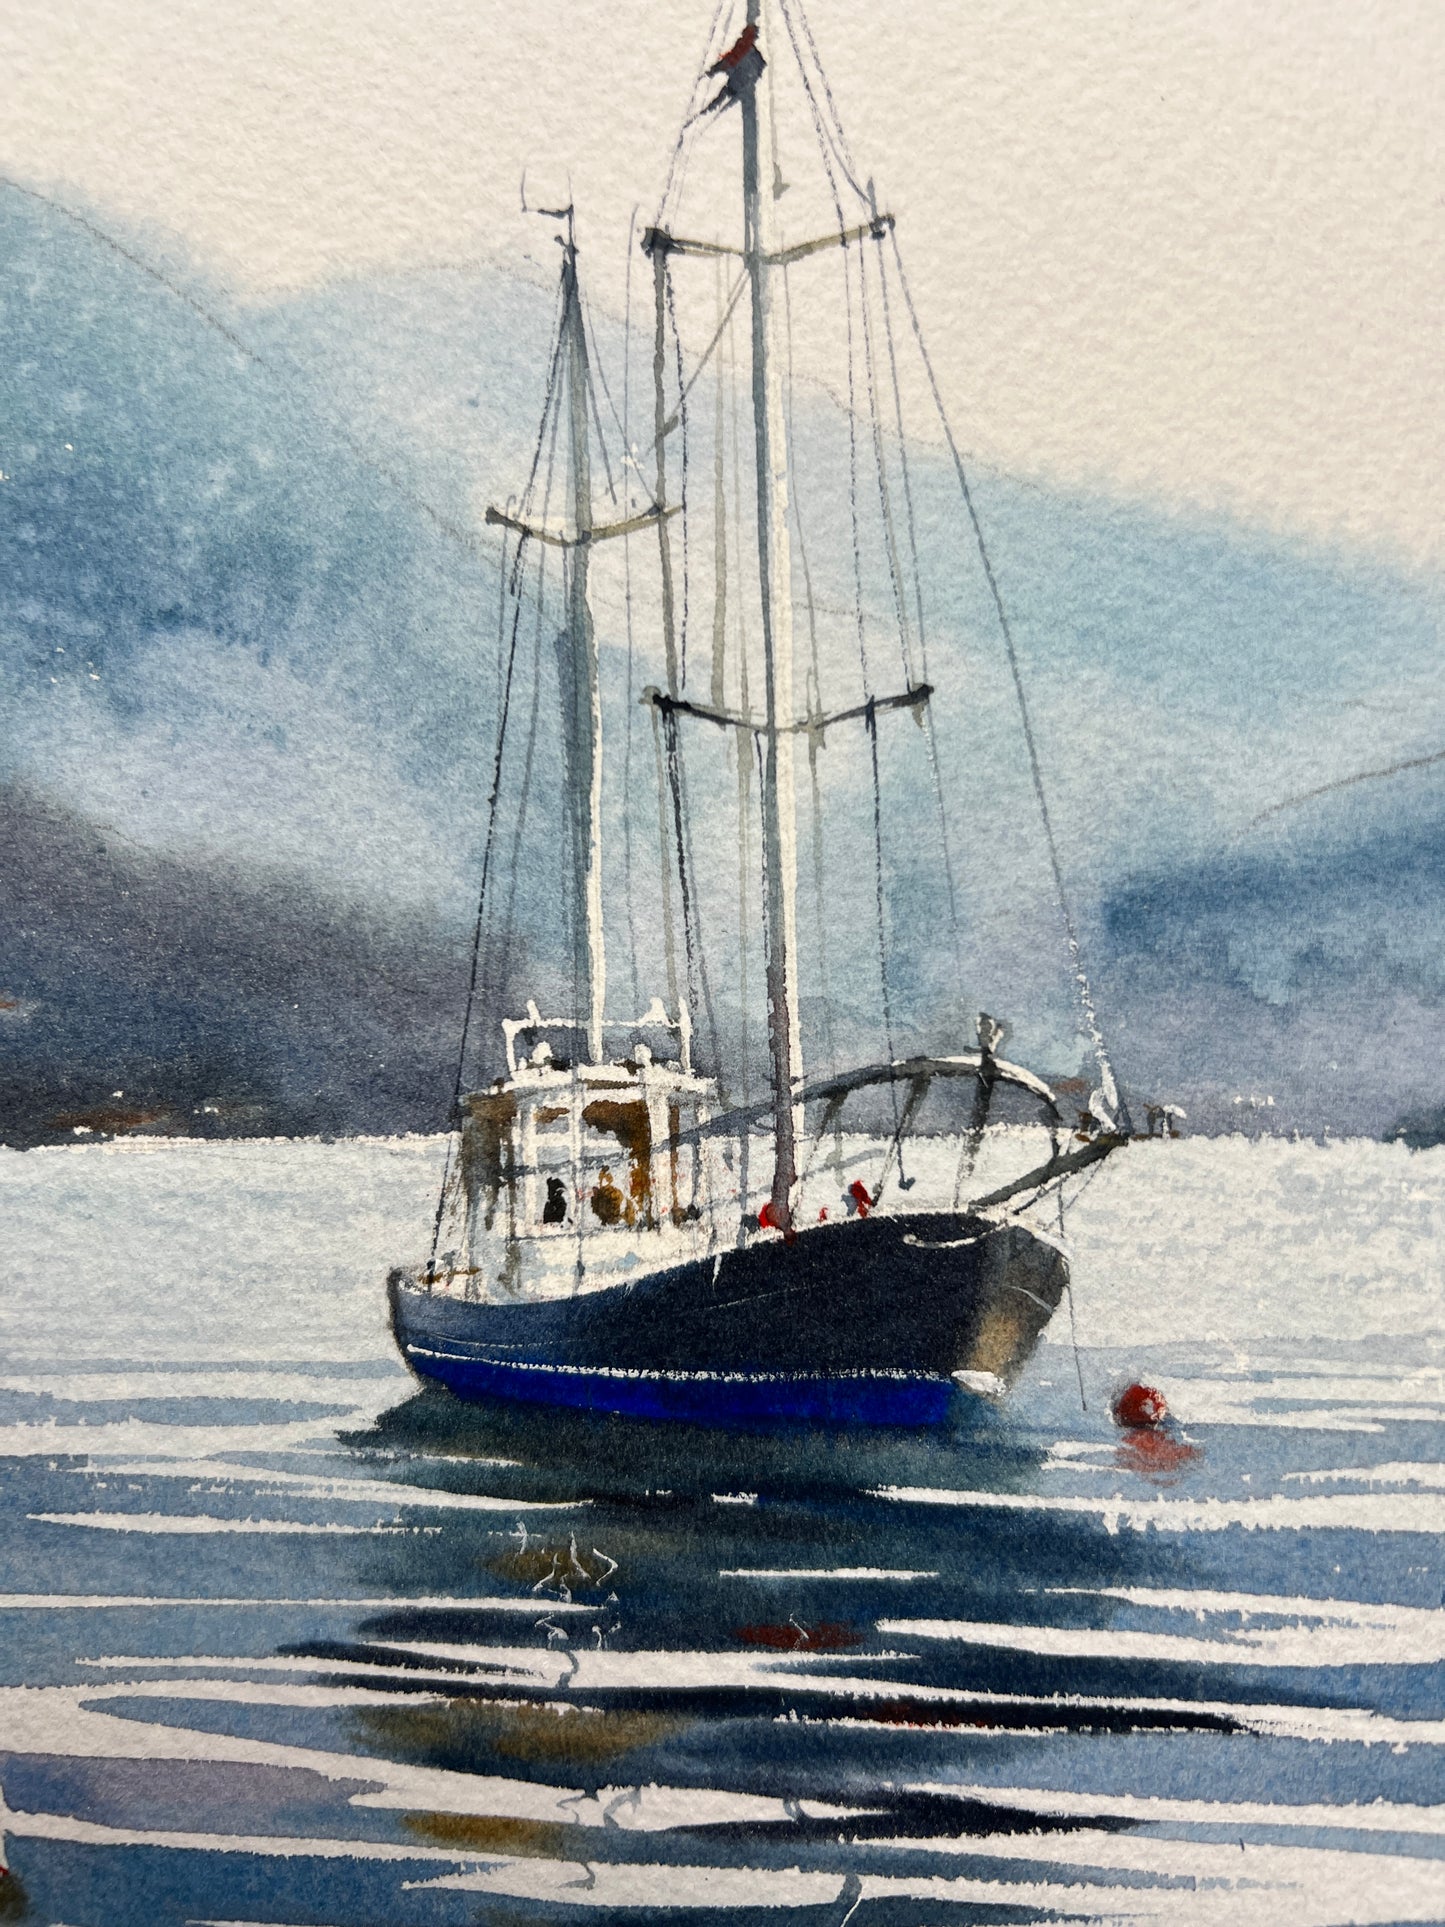 Blue Painting Original, Watercolor Fishing Boat Artwork, Gift for Sailor, Gloomy Sea, Seascape Art